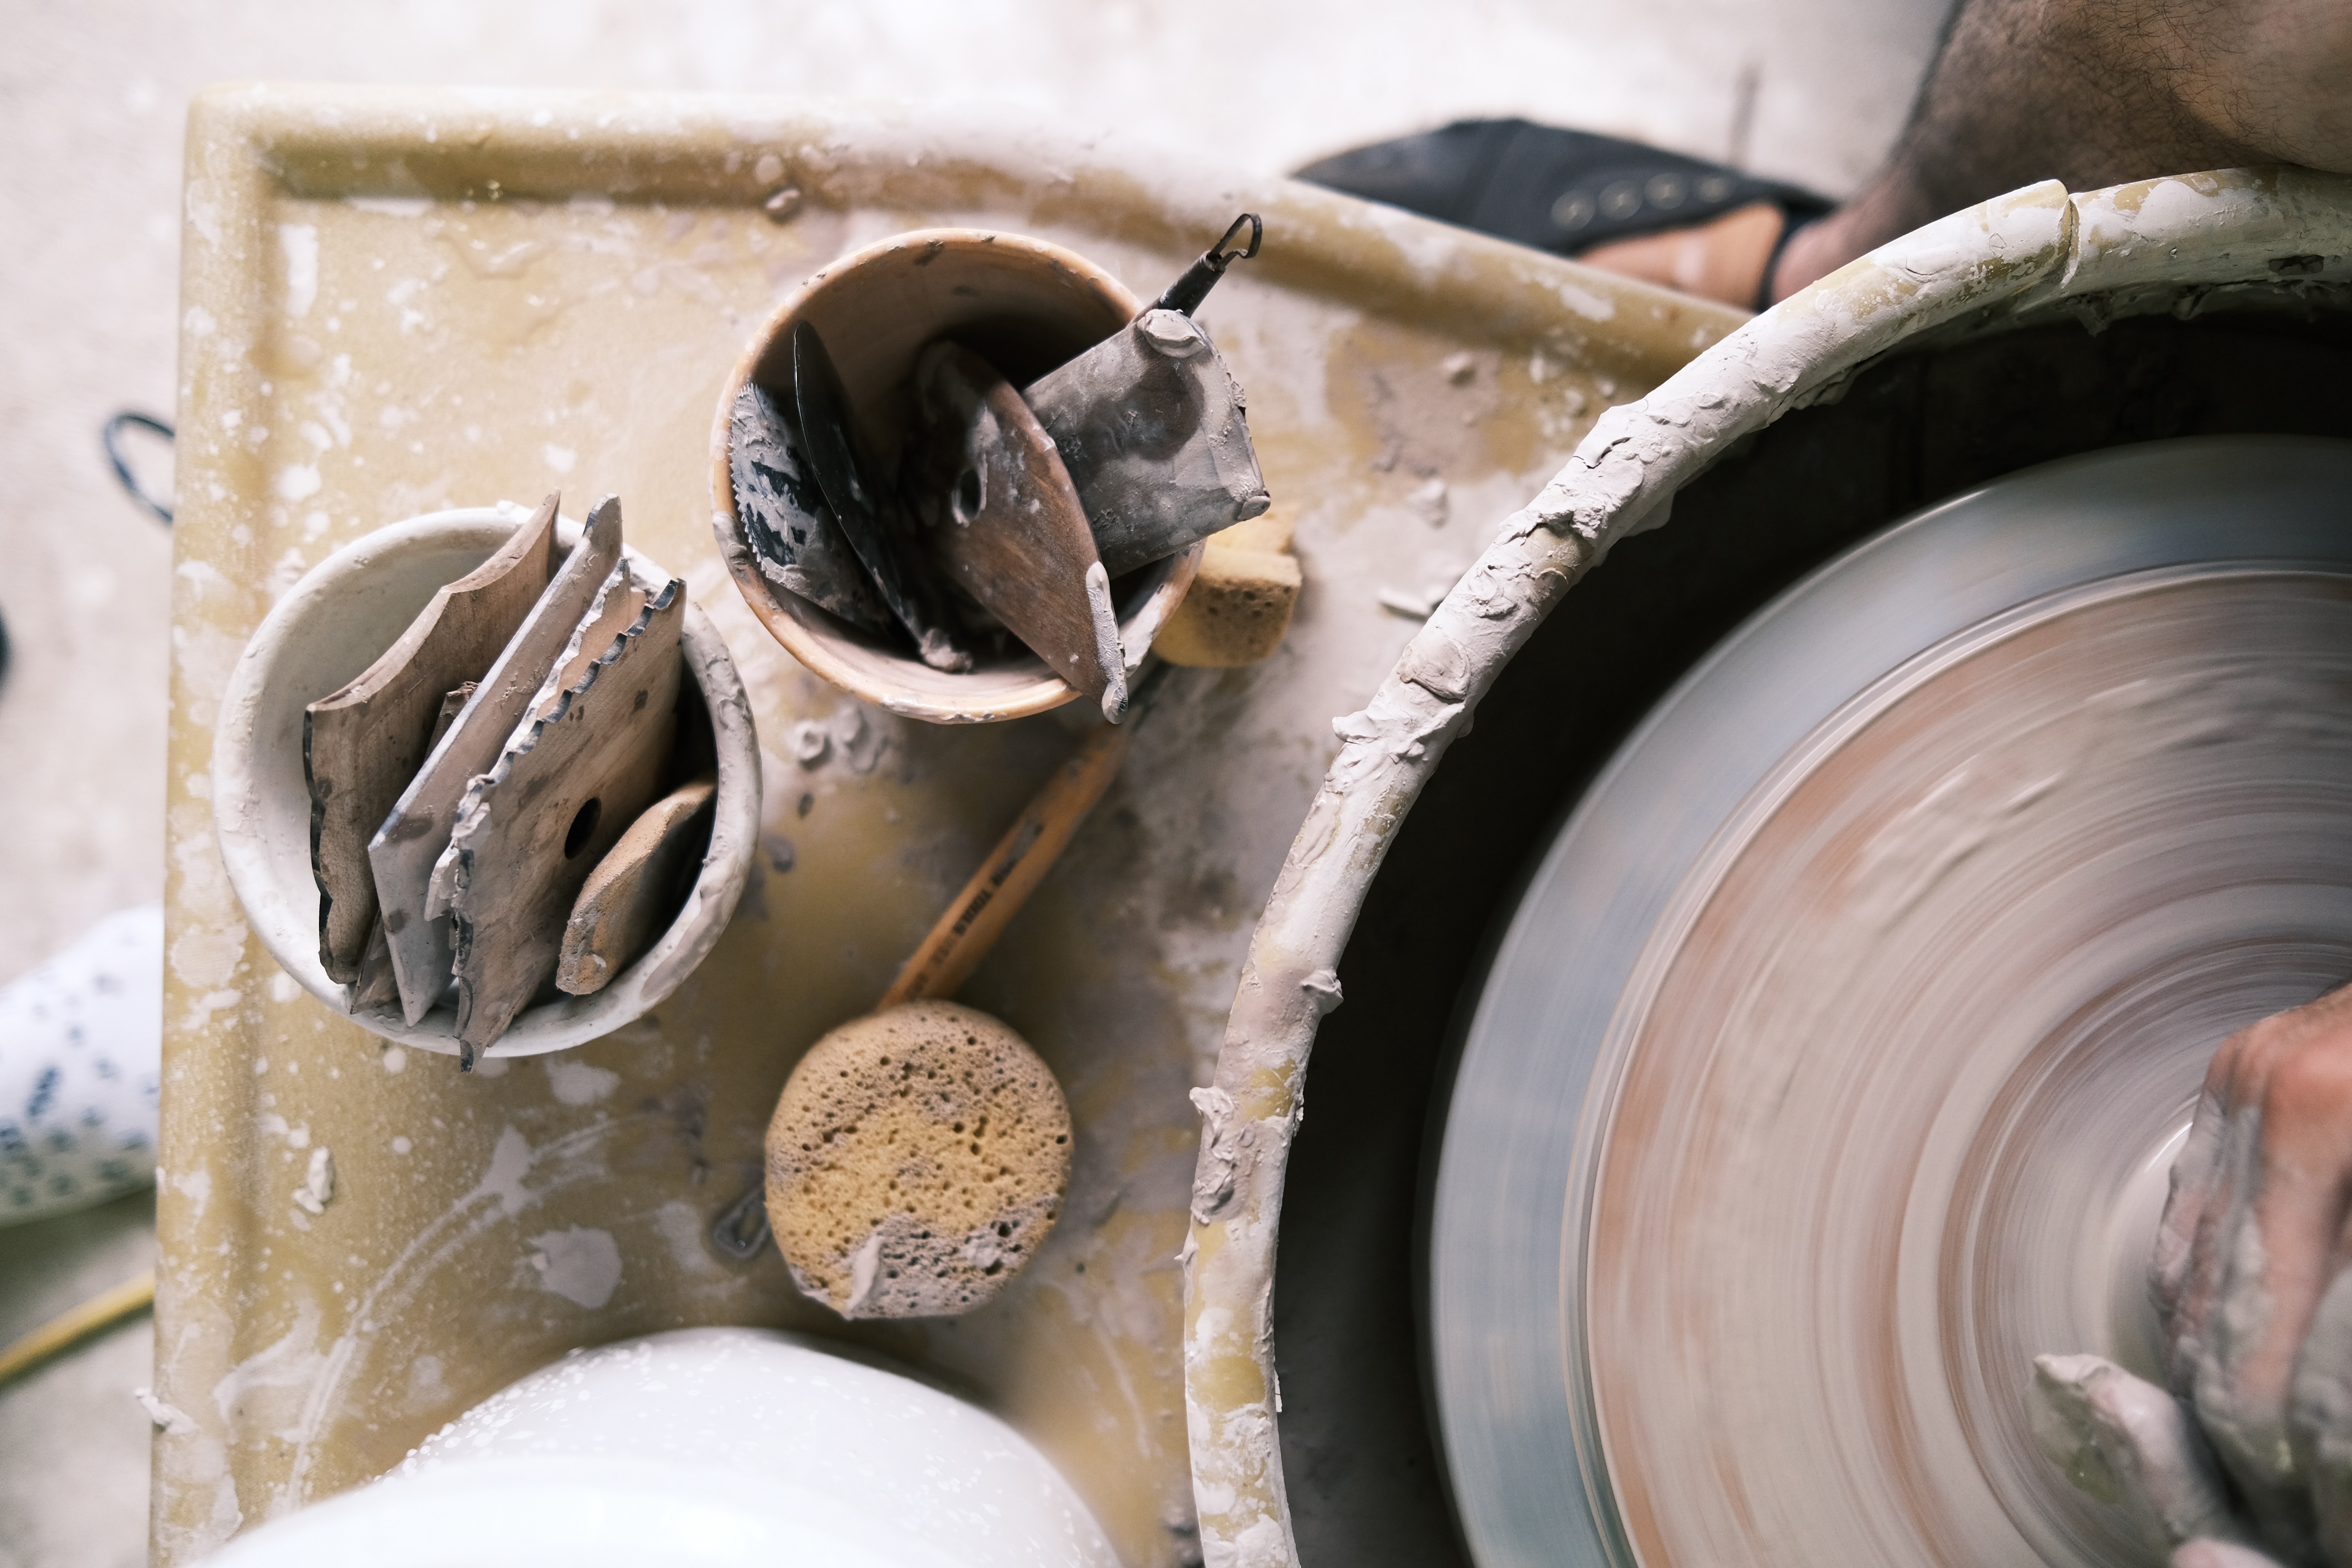 Skutt Prodigy Pottery Wheel - The Ceramic Shop